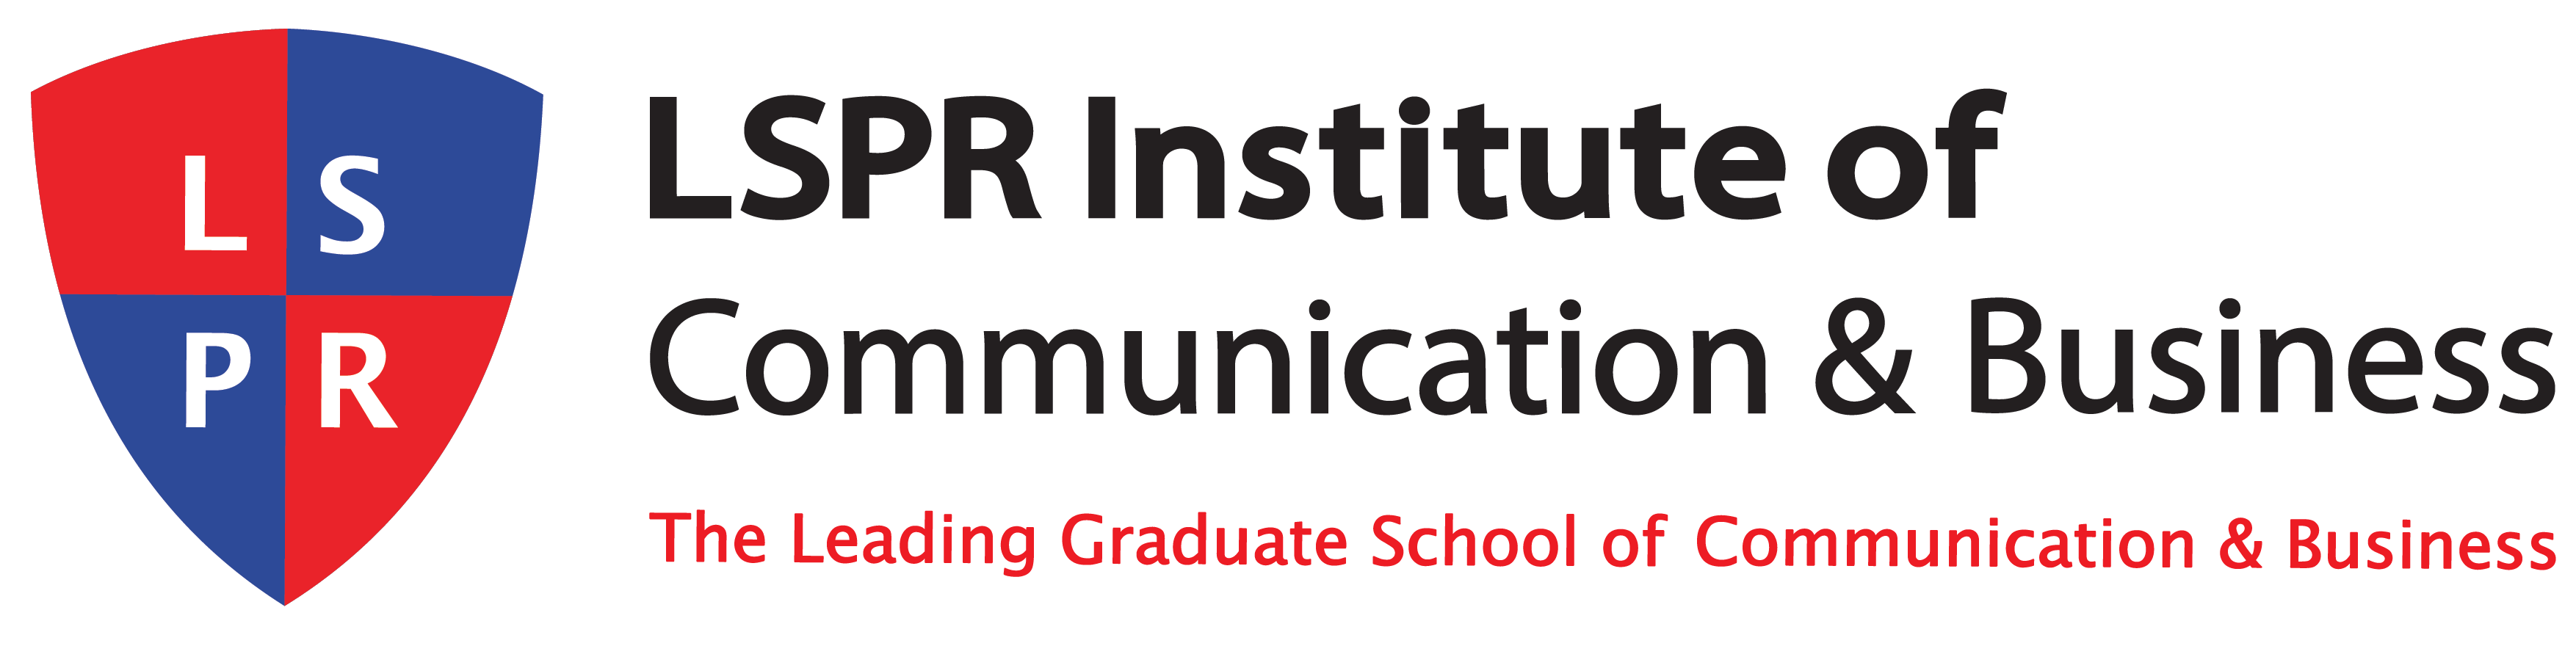 Logo LSPR Institute of Communication & Business